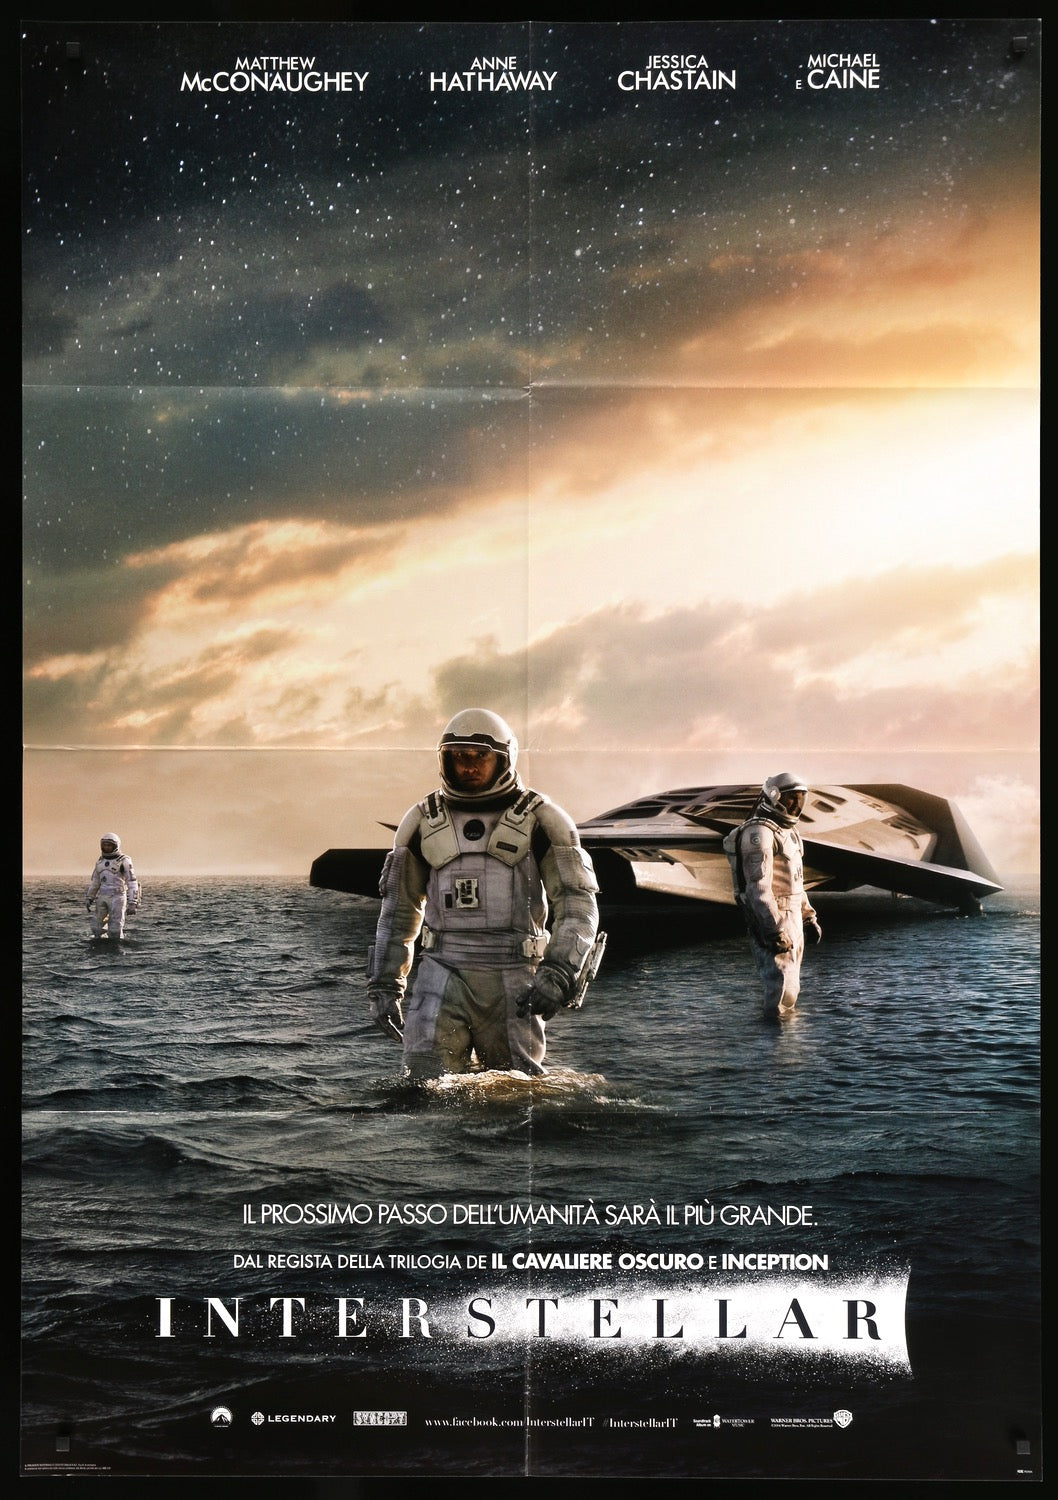 Interstellar (2014) original movie poster for sale at Original Film Art